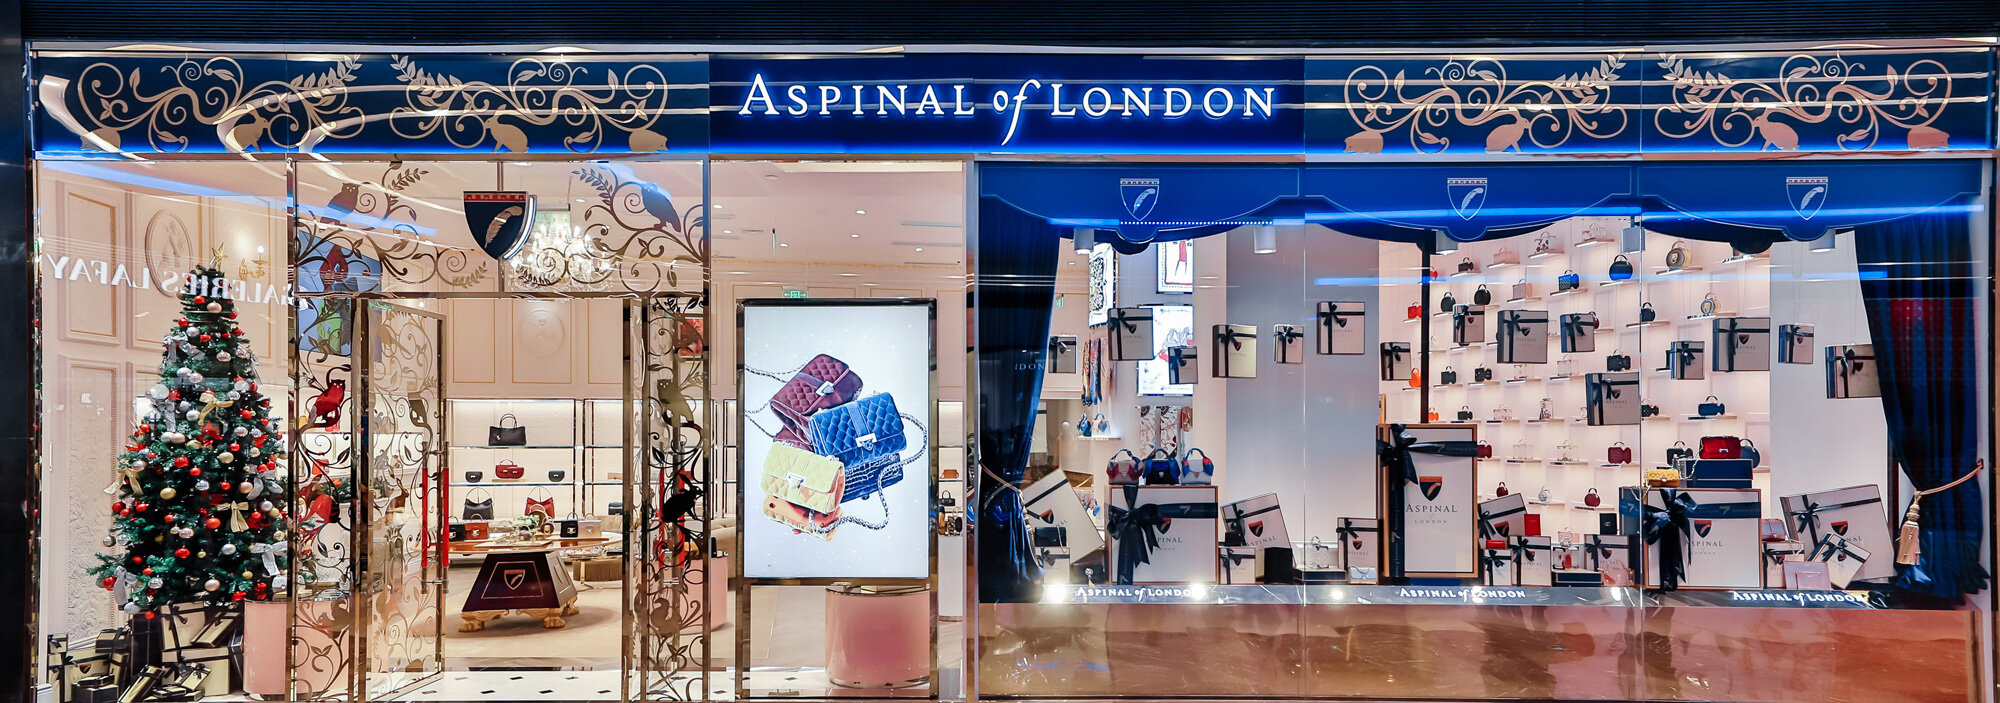 Aspinal of London flagship store by Caulder Moore, Leeds – UK